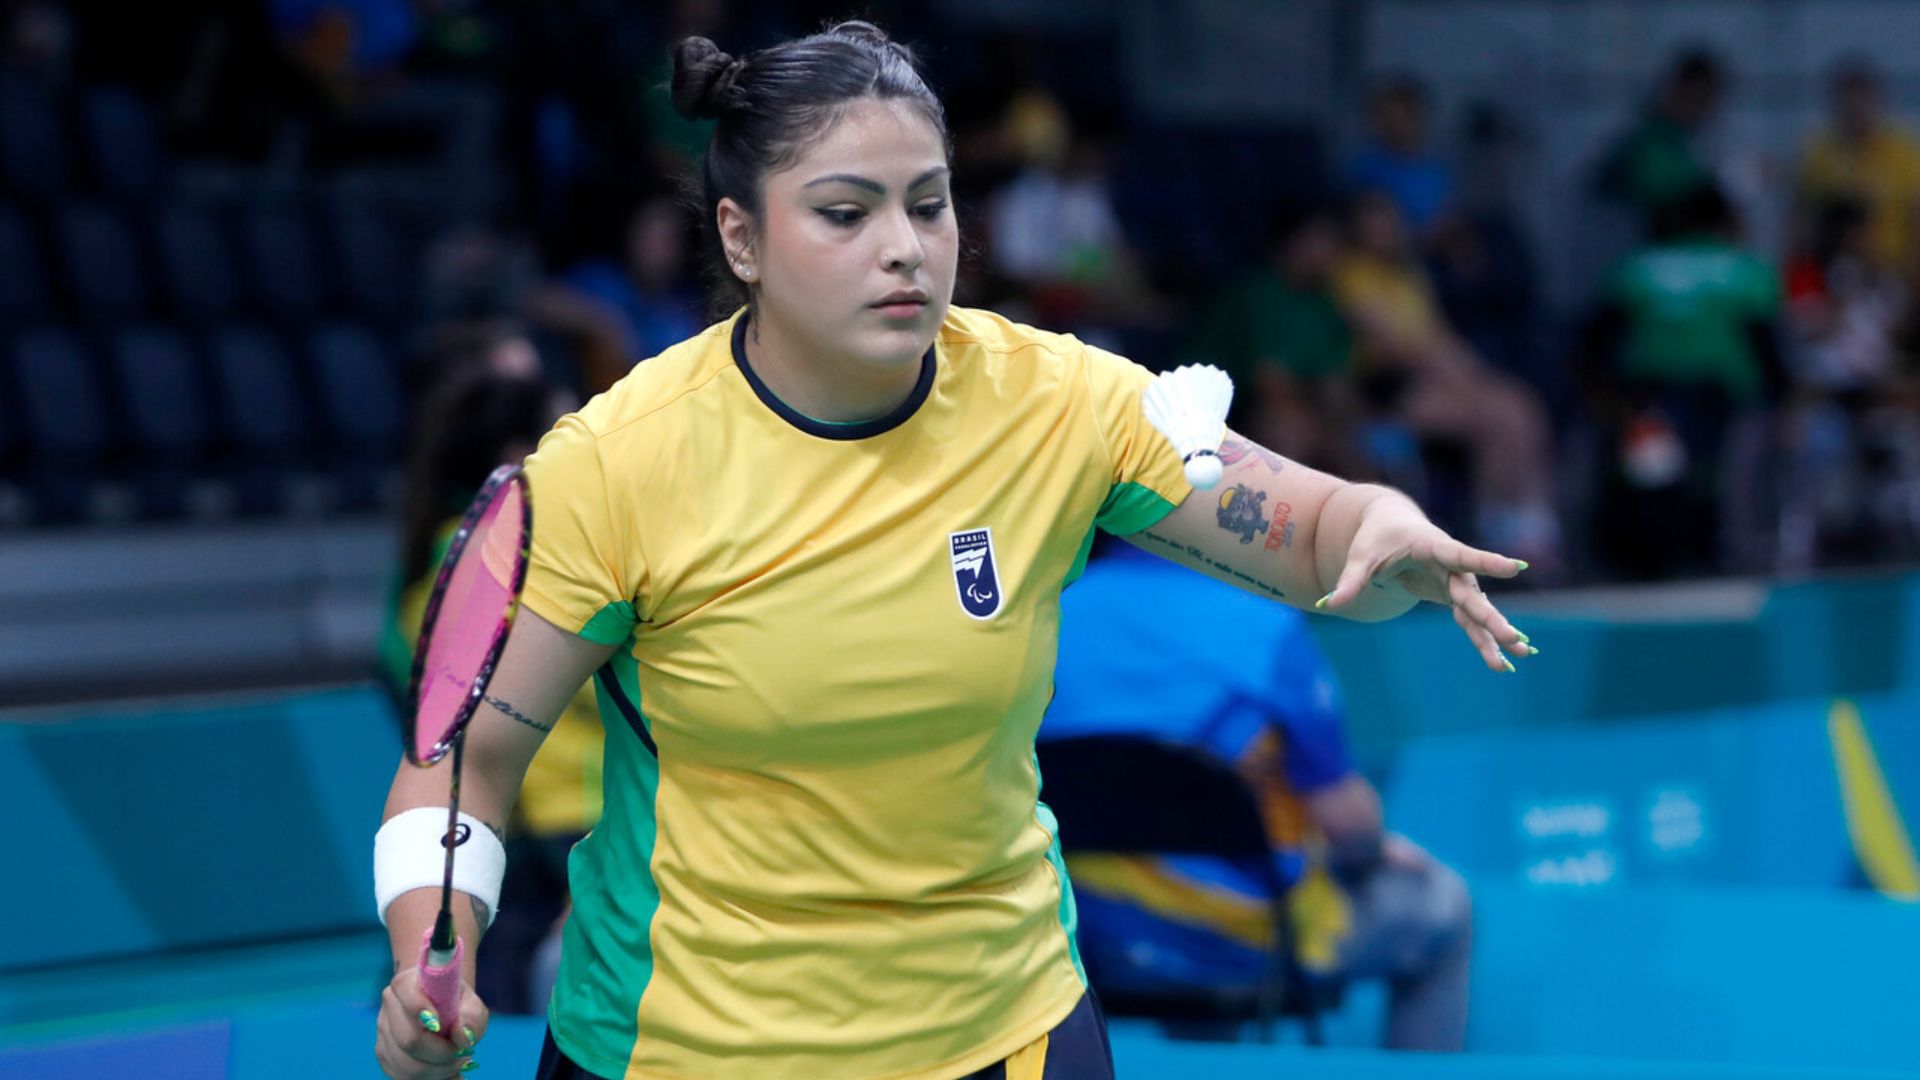 Para Badminton: Edwarda Oliveira Aims to Continue Adding Gold for Brazil